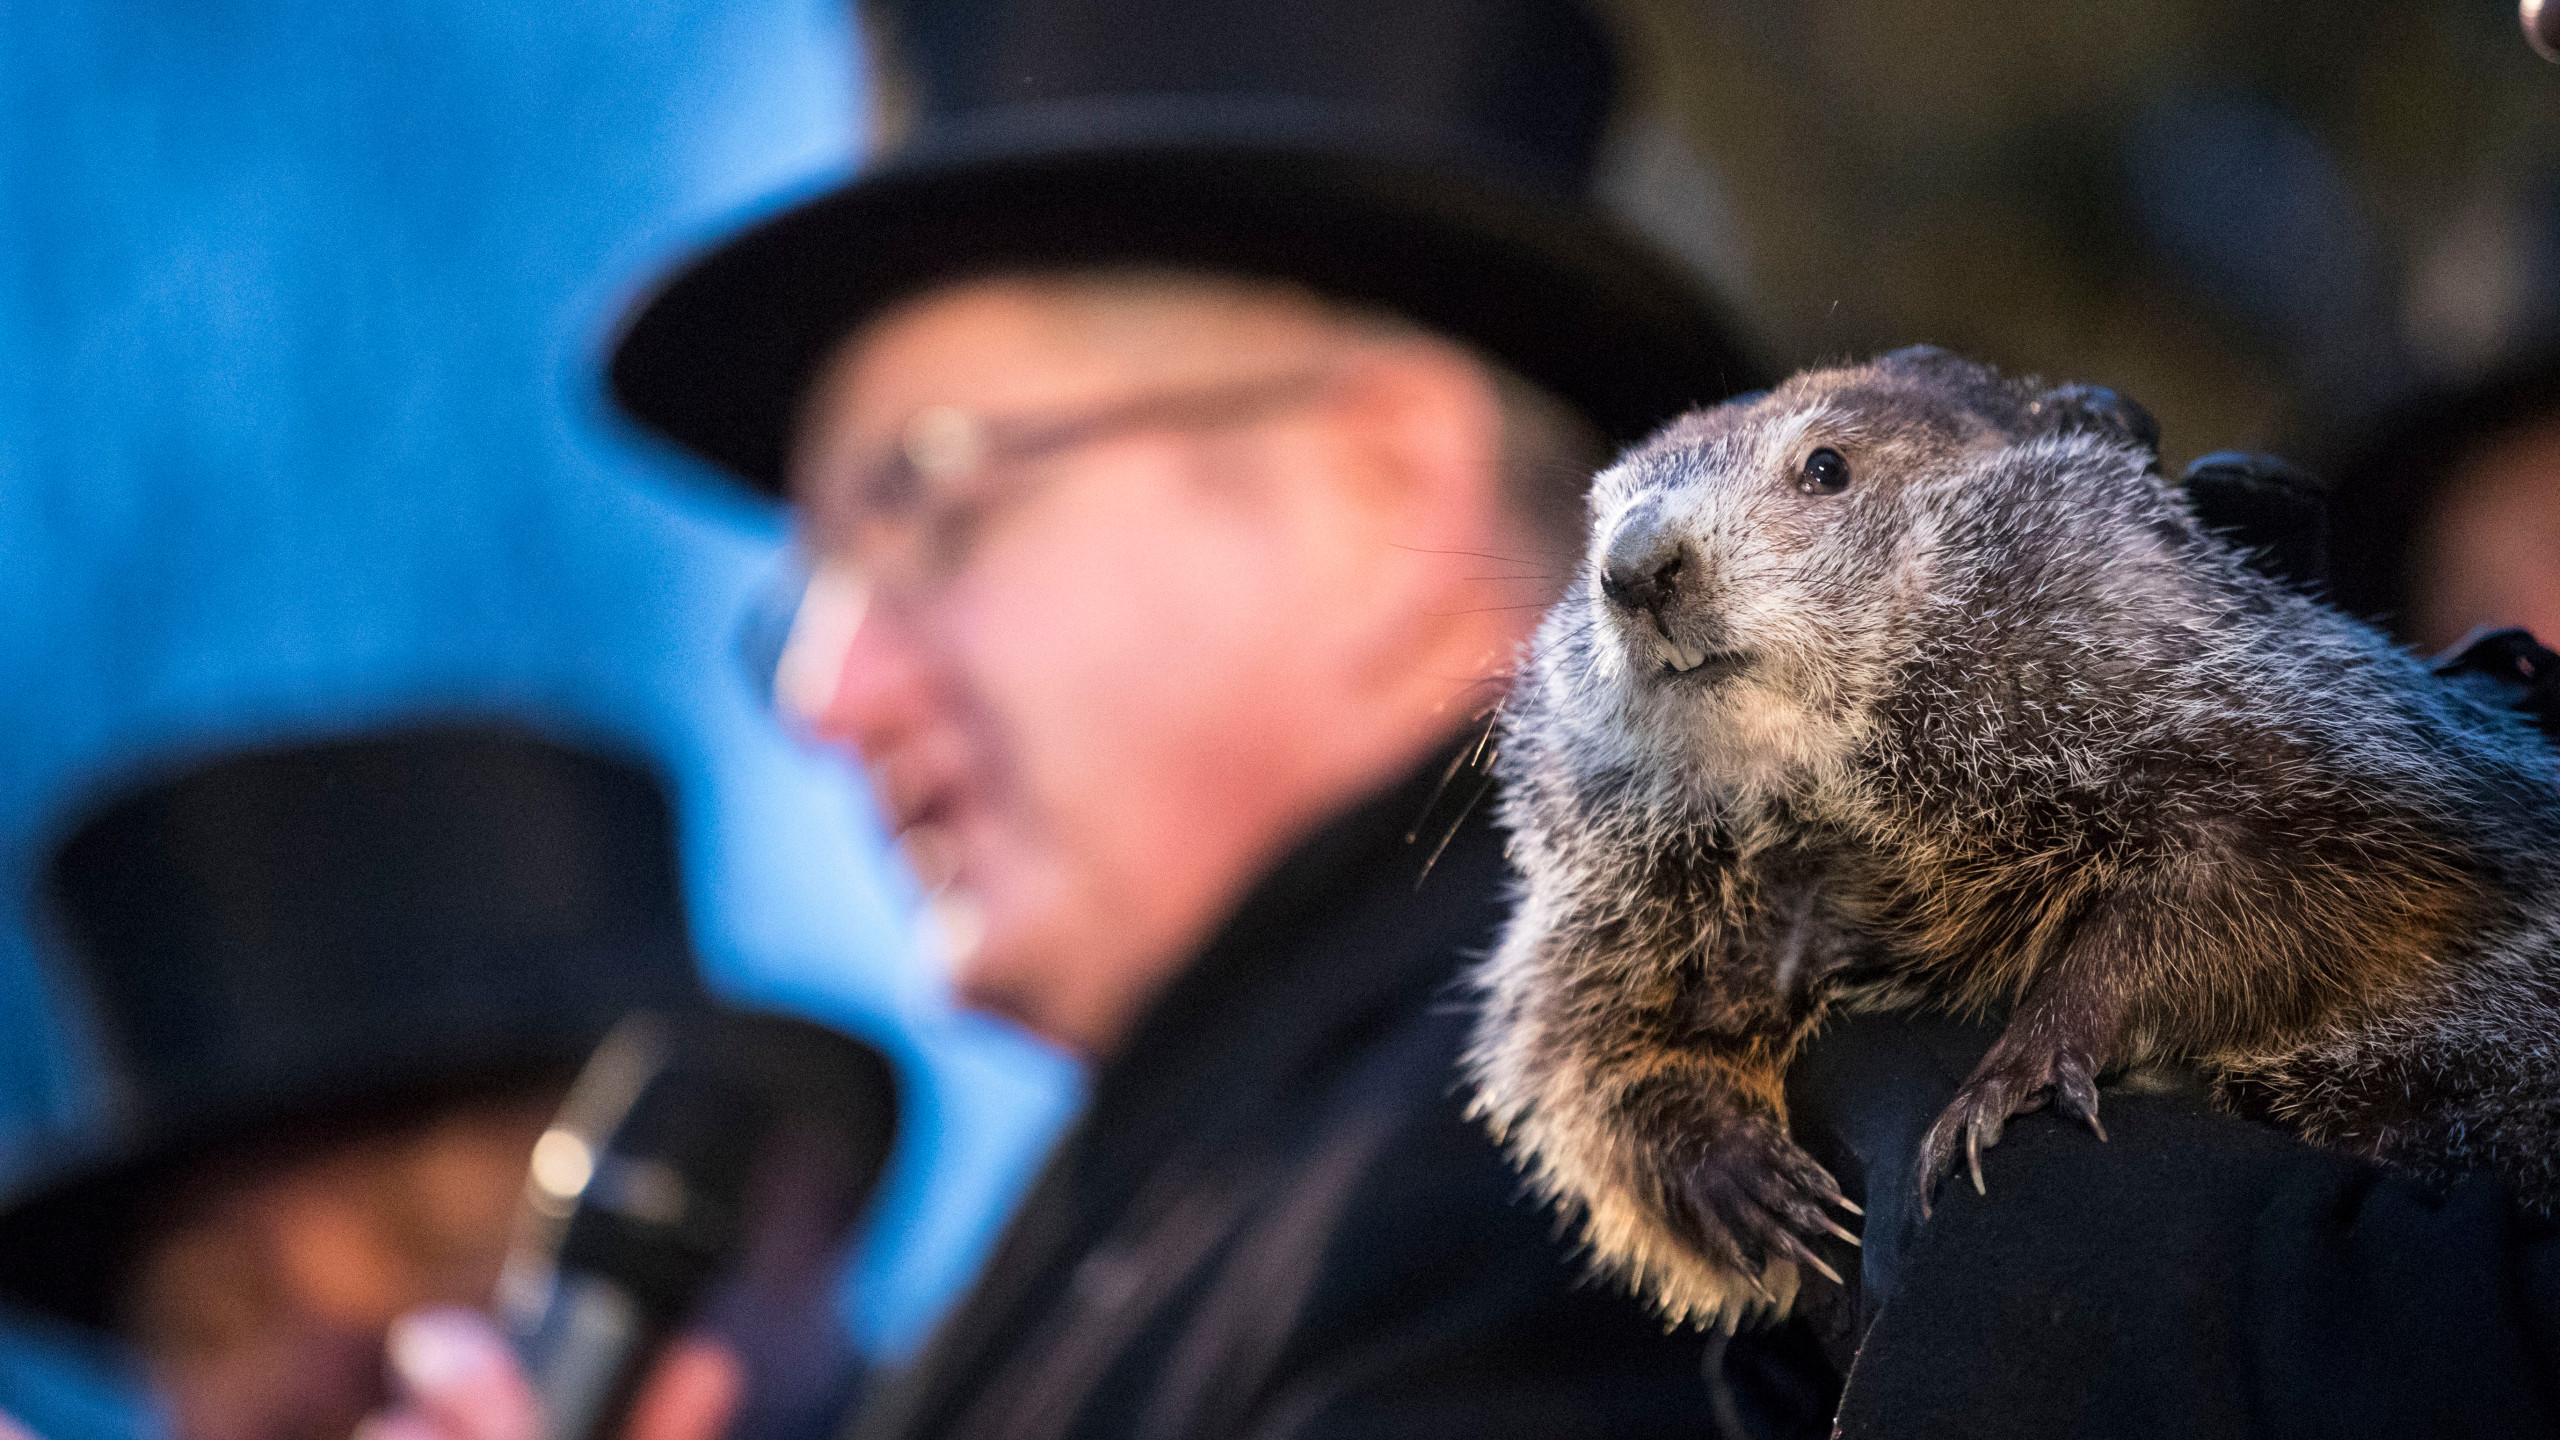 PETA: Retire Punxsutawney Phil, use animatronic groundhog